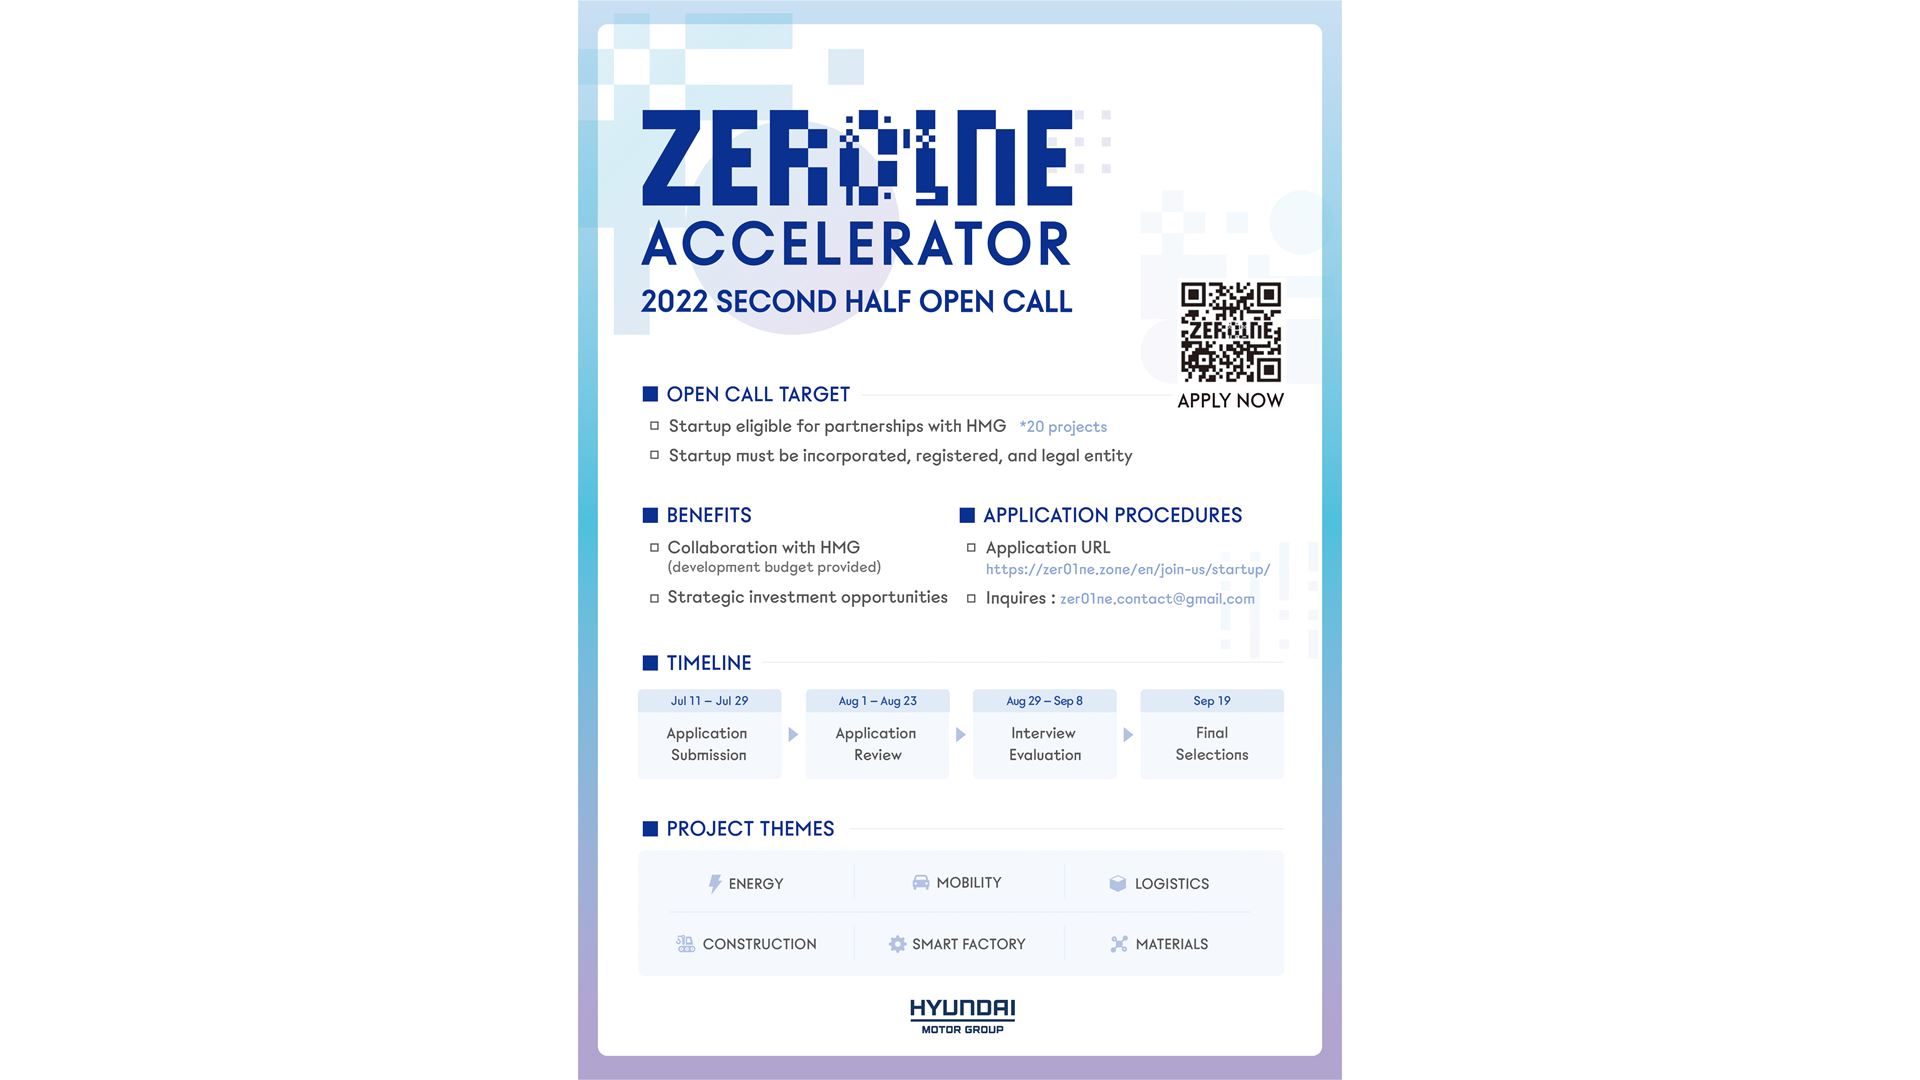 Hyundai Motor Group Recruiting Startups for 2022 ZER01NE Accelerator Second Half Open Call